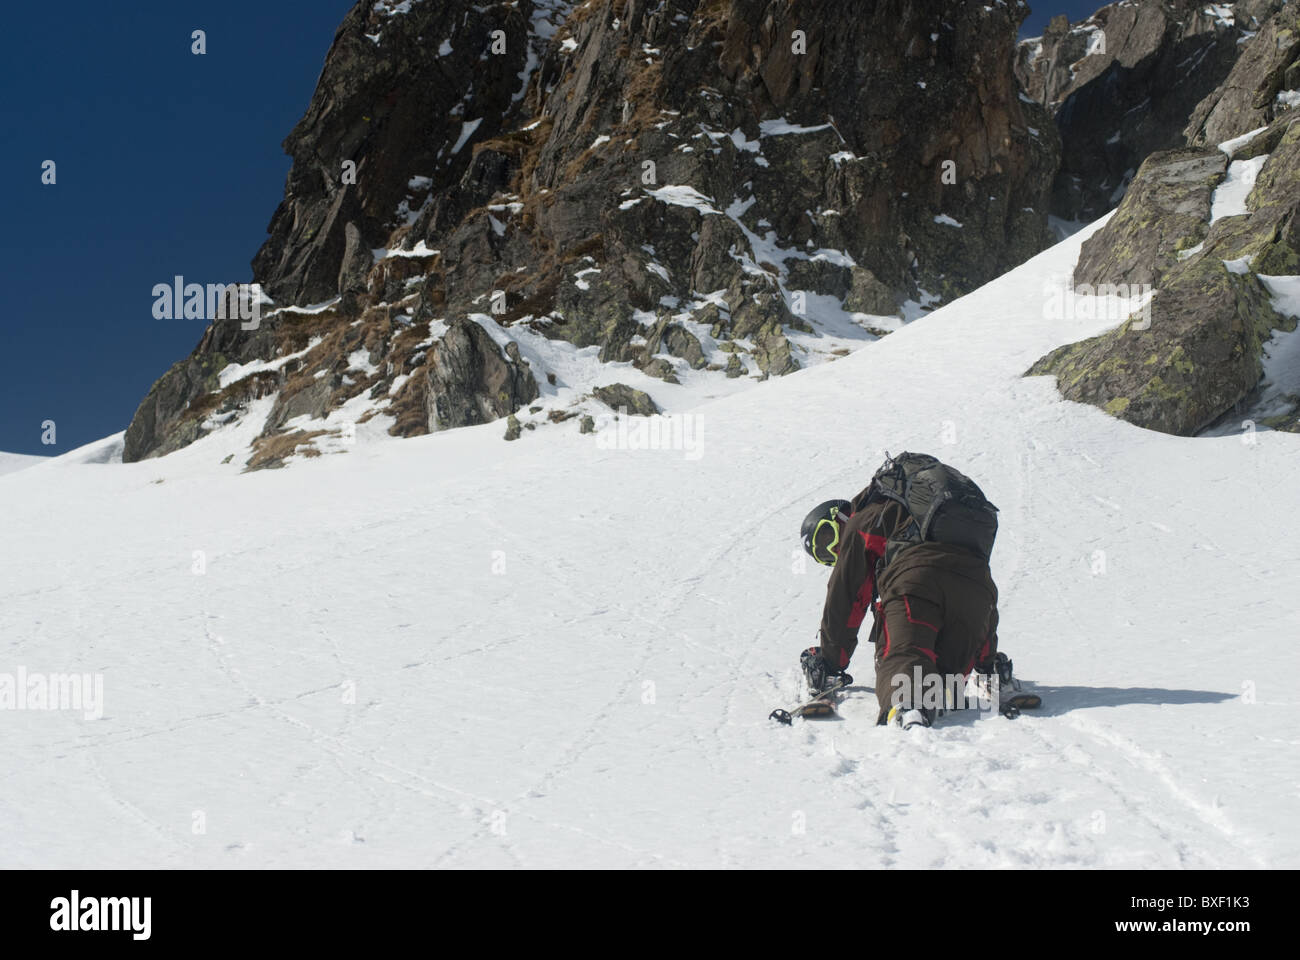 A free skier climbing up a snowy mountain side in Andermatt, Switzerland Stock Photo